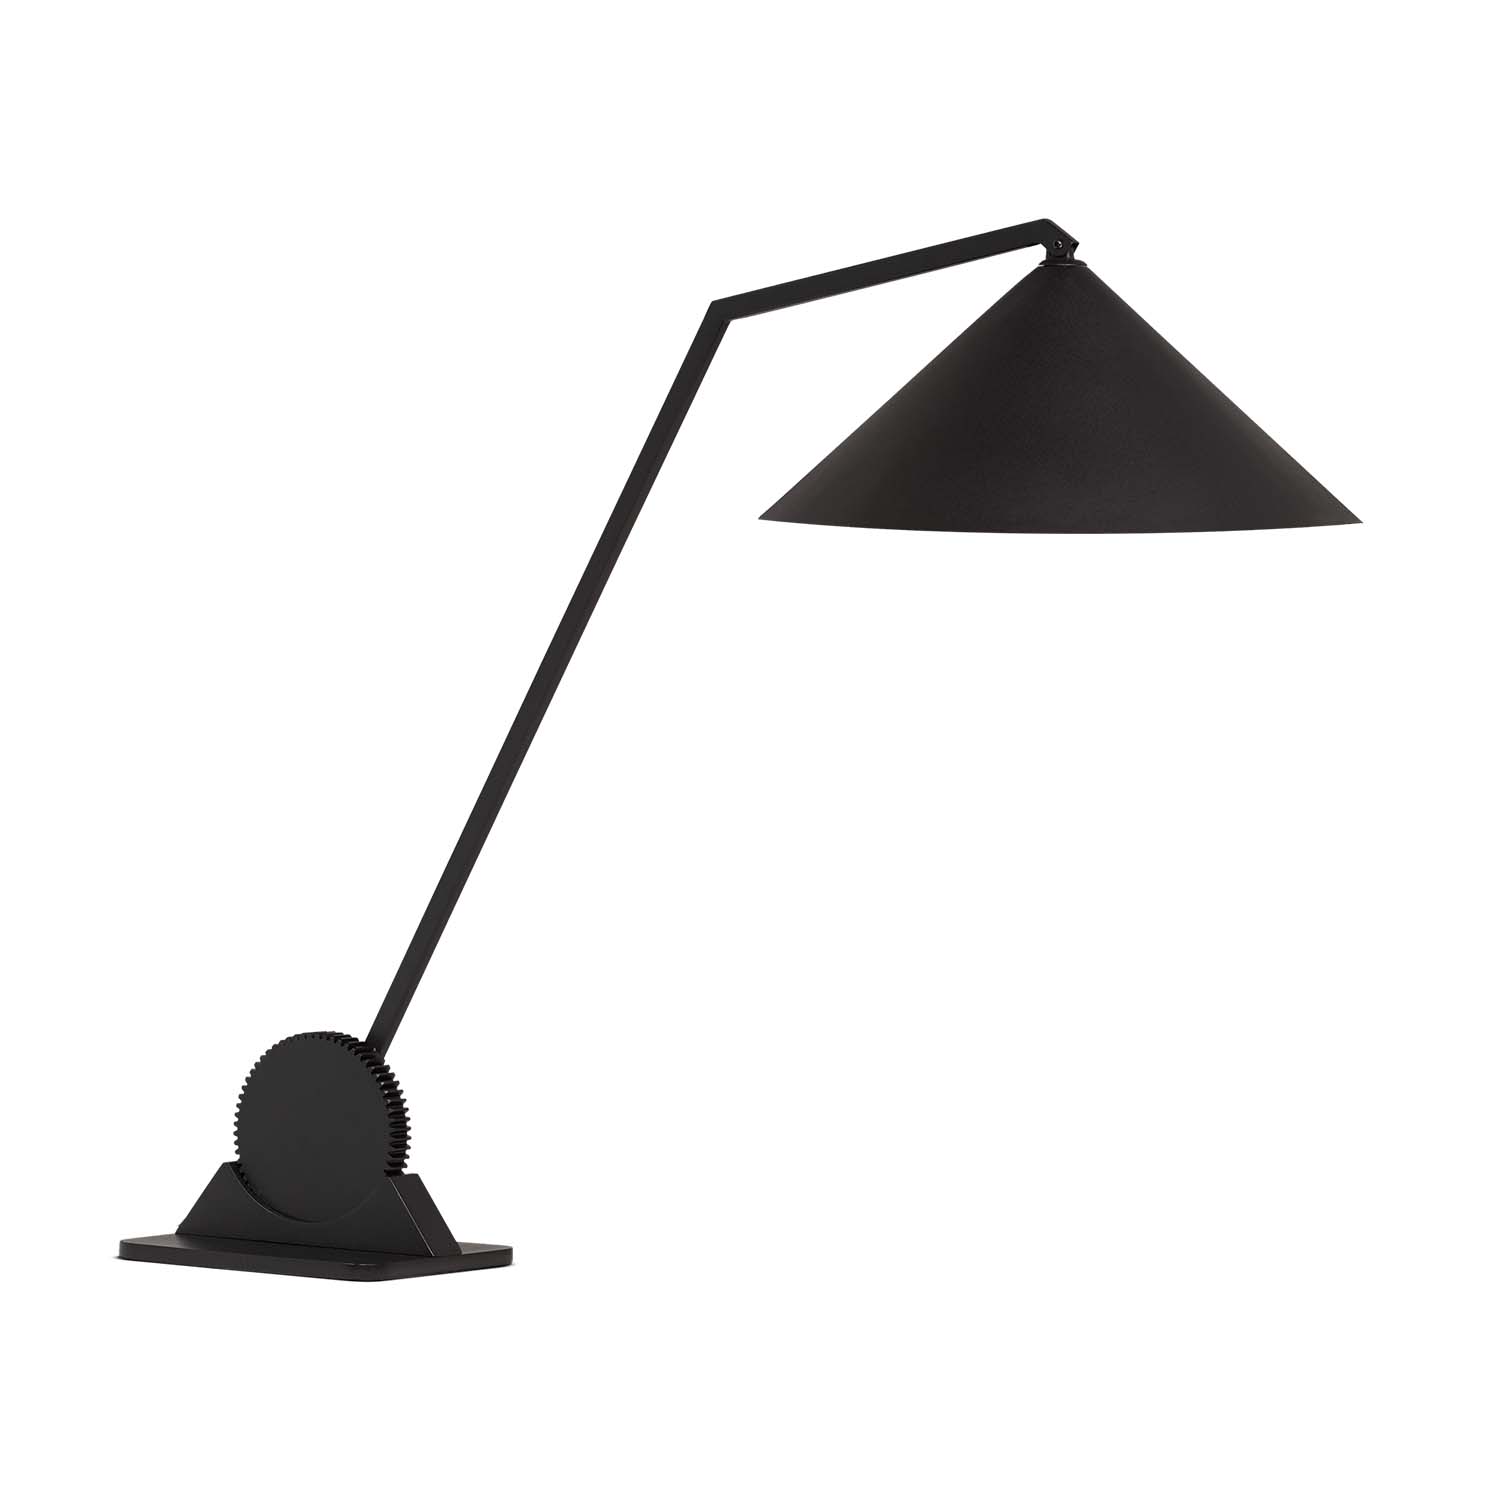 GEAR - Lampe de bureau noire design et moderne